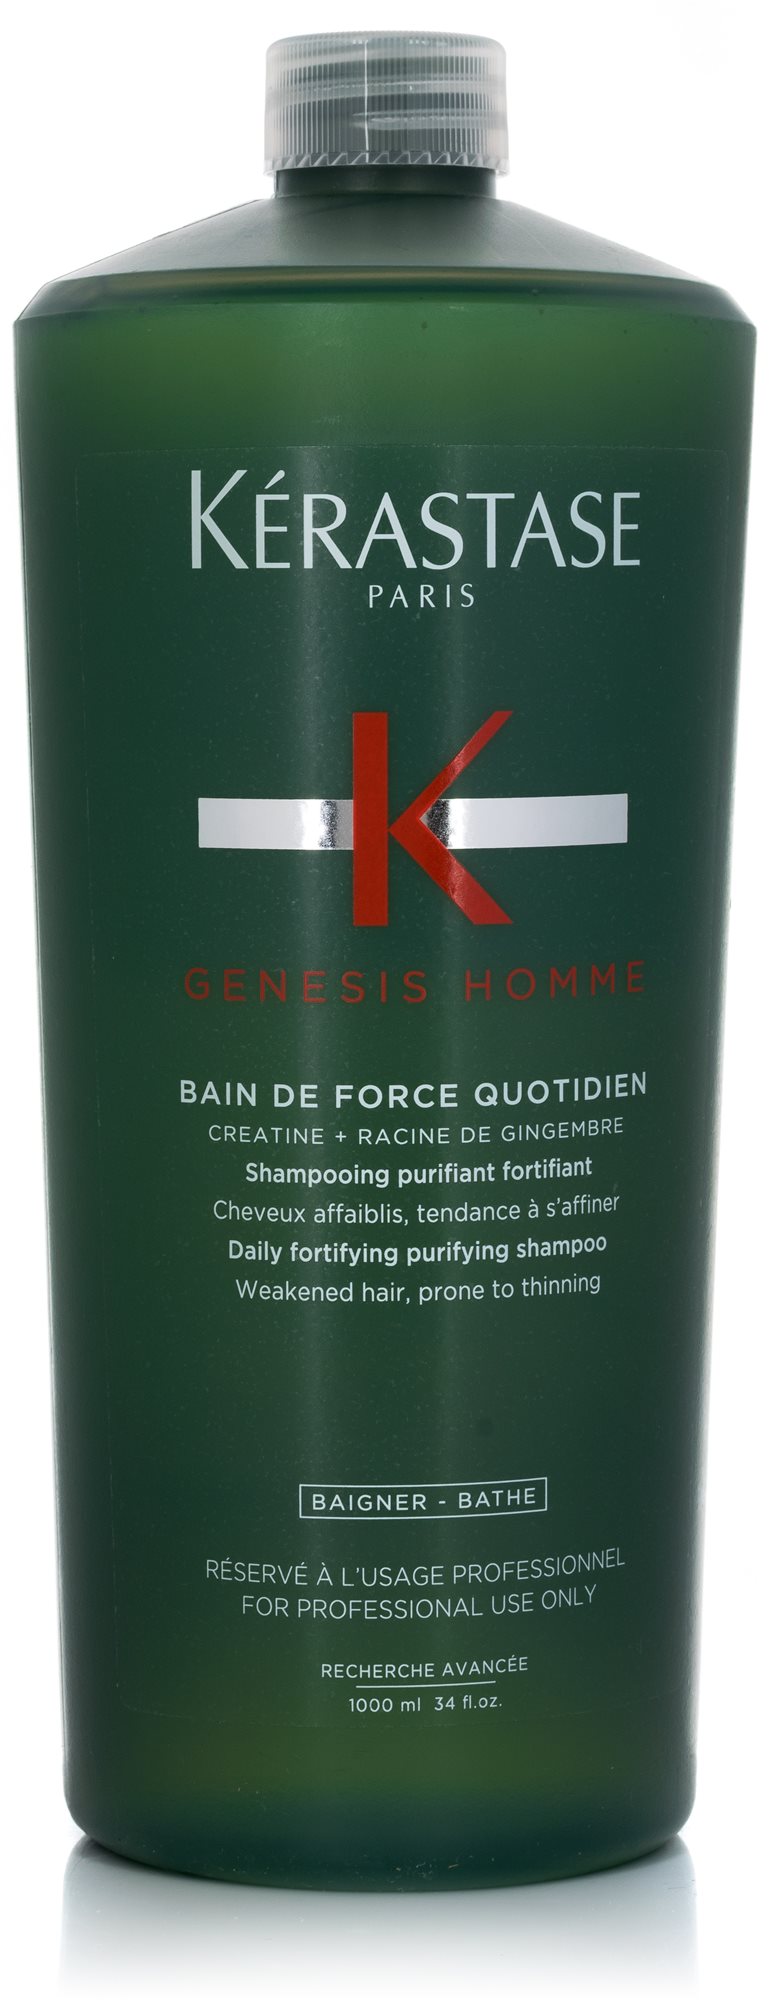 KÉRASTASE Genesis Homme Daily Purifying Fortifying Shampoo 1000 ml